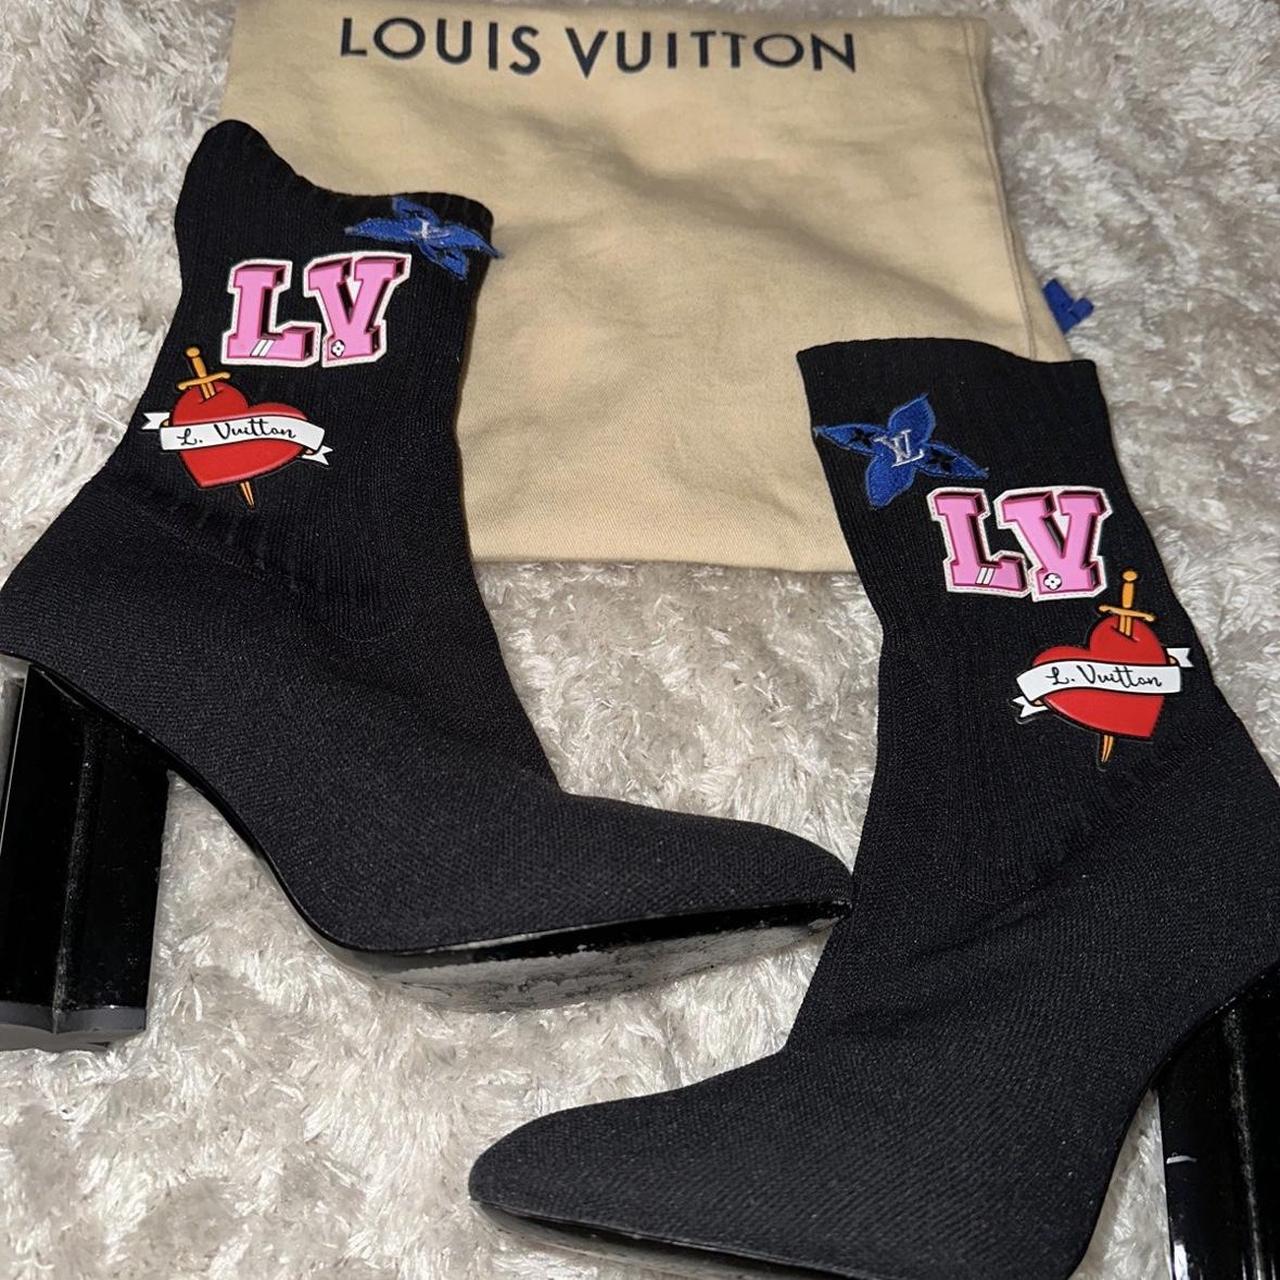 LOUIS VUITTON Silhouette Black Heart Ankle Boots 100